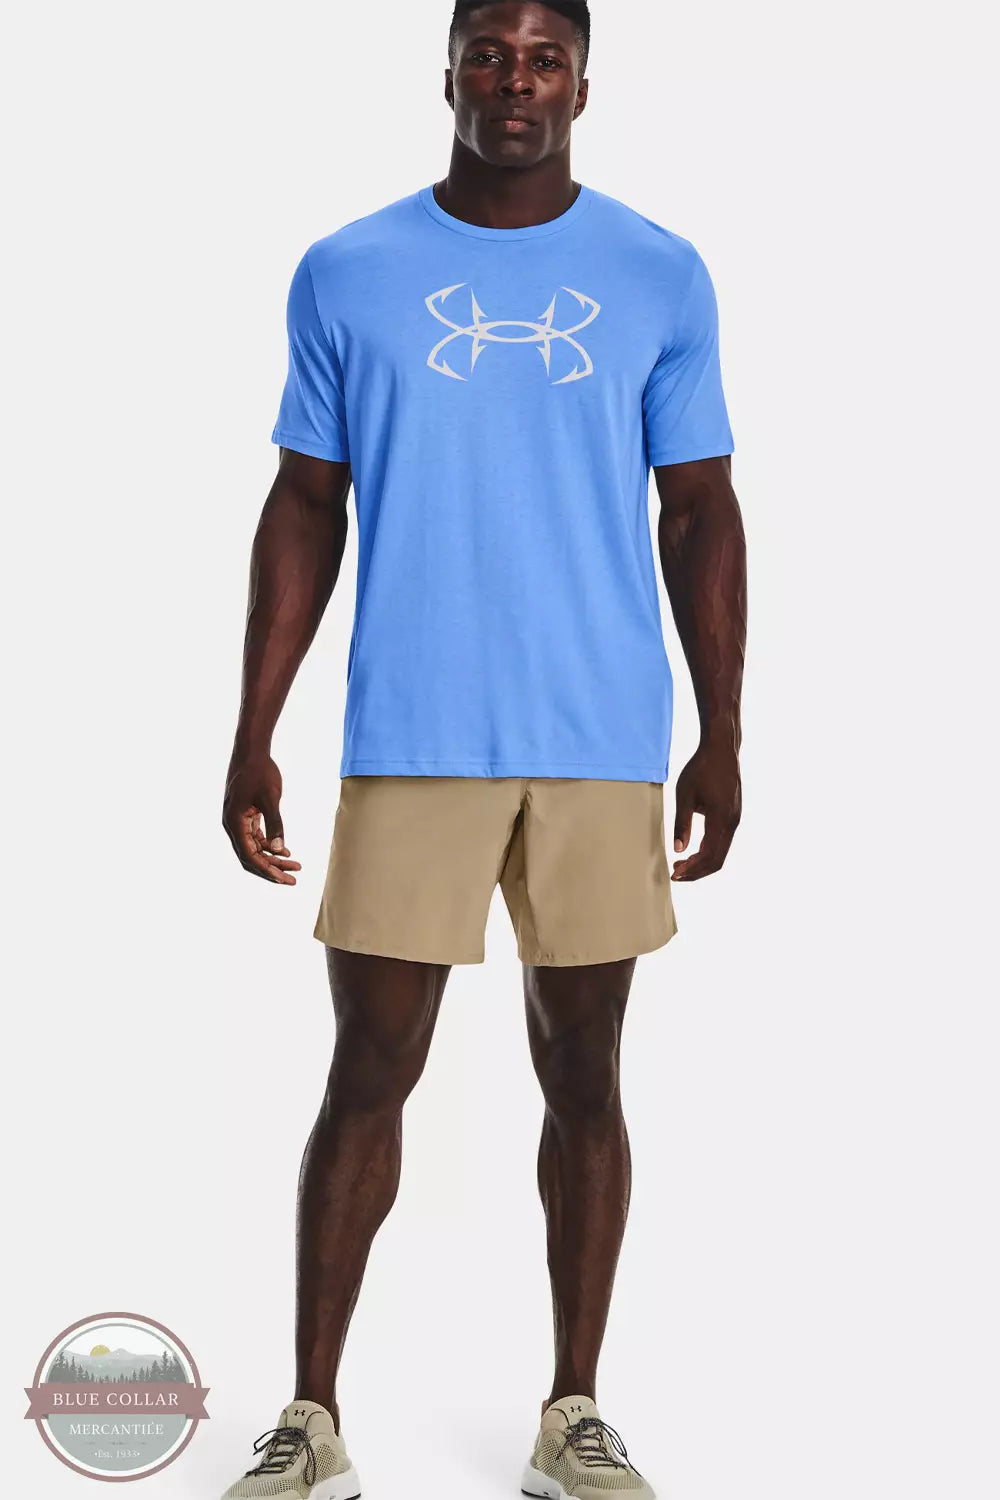 Under Armour 1331197 Fish Hook Logo Short Sleeve T-Shirt Carolina Blue Full View